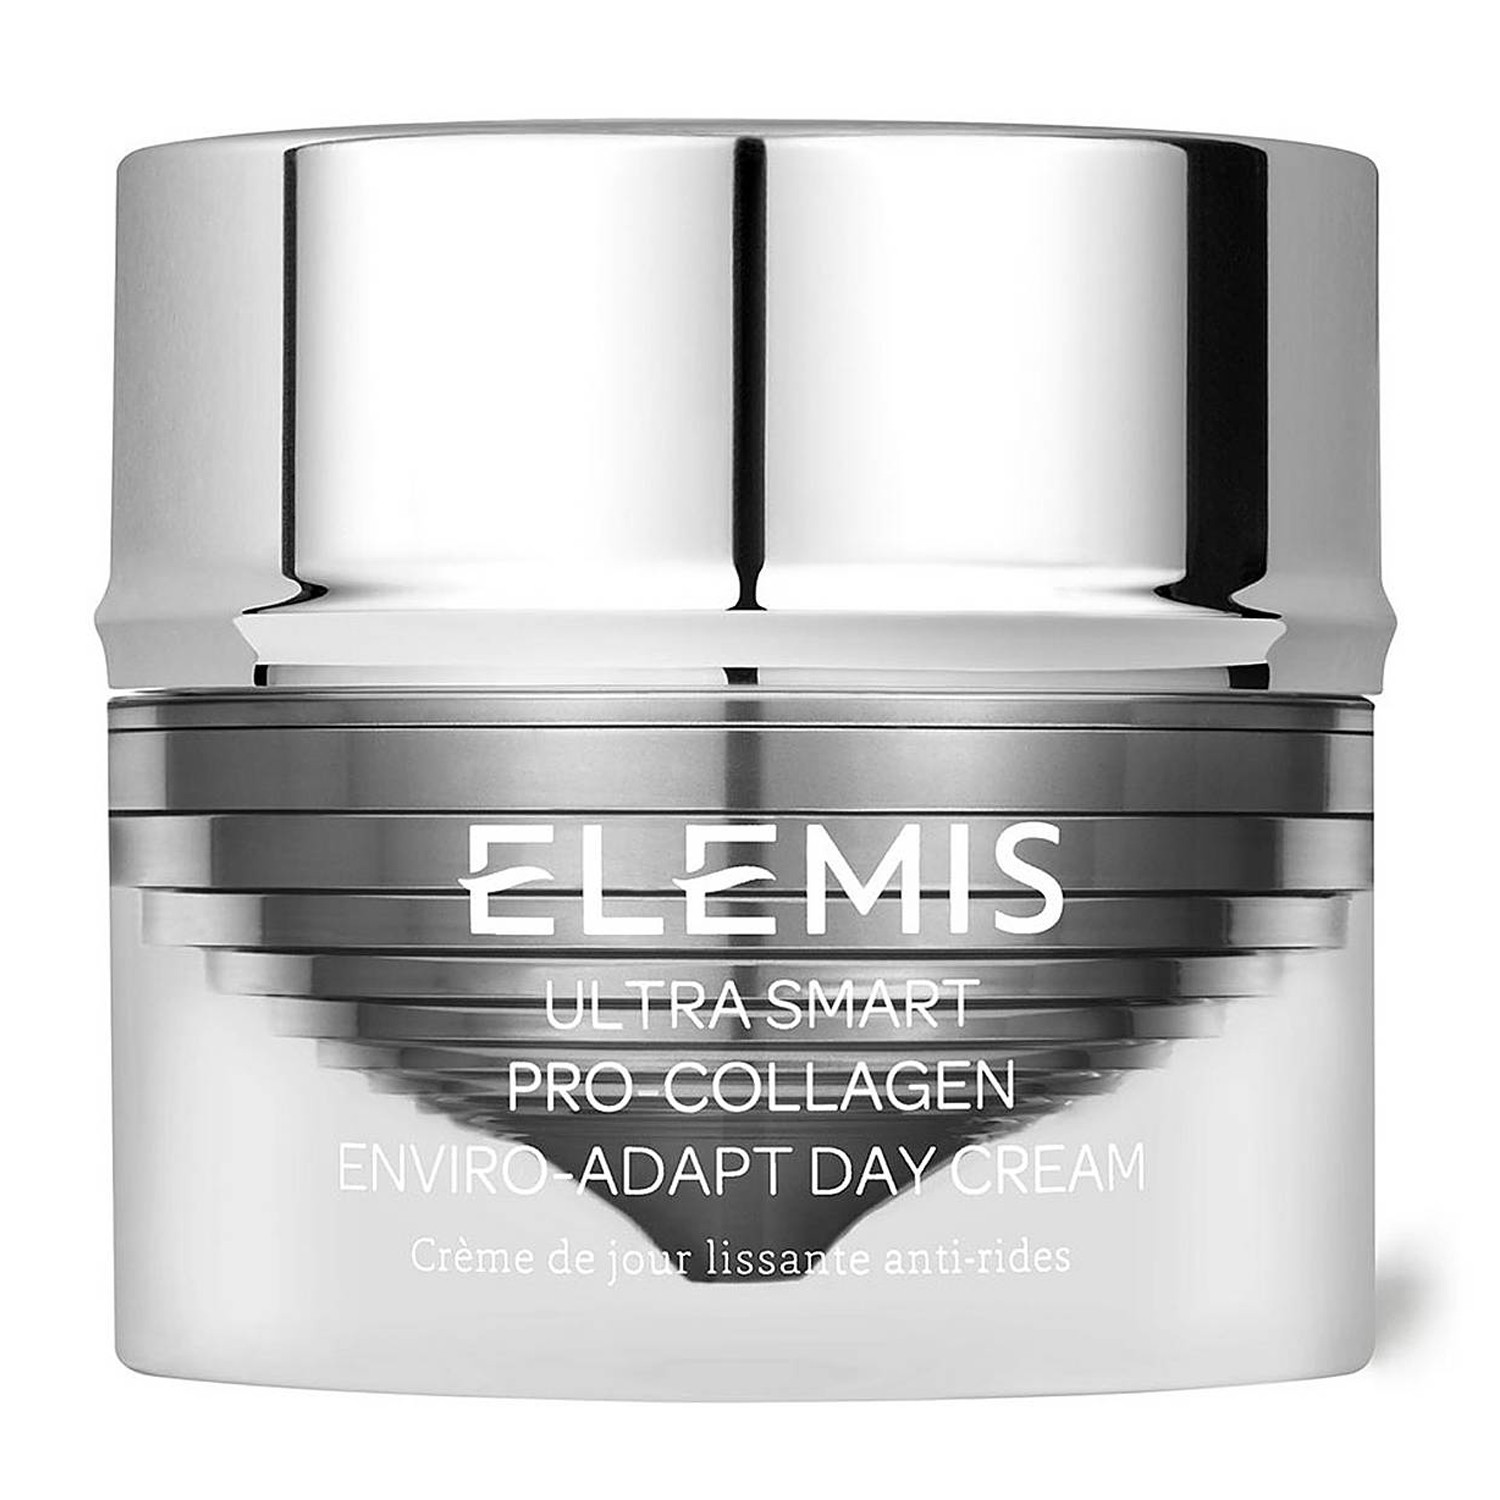 Elelmis ULTRA SMART Pro-Collagen Enviro-Adapt Day Cream Ультра Смарт Про-Колаген "Денний адаптивний крем"